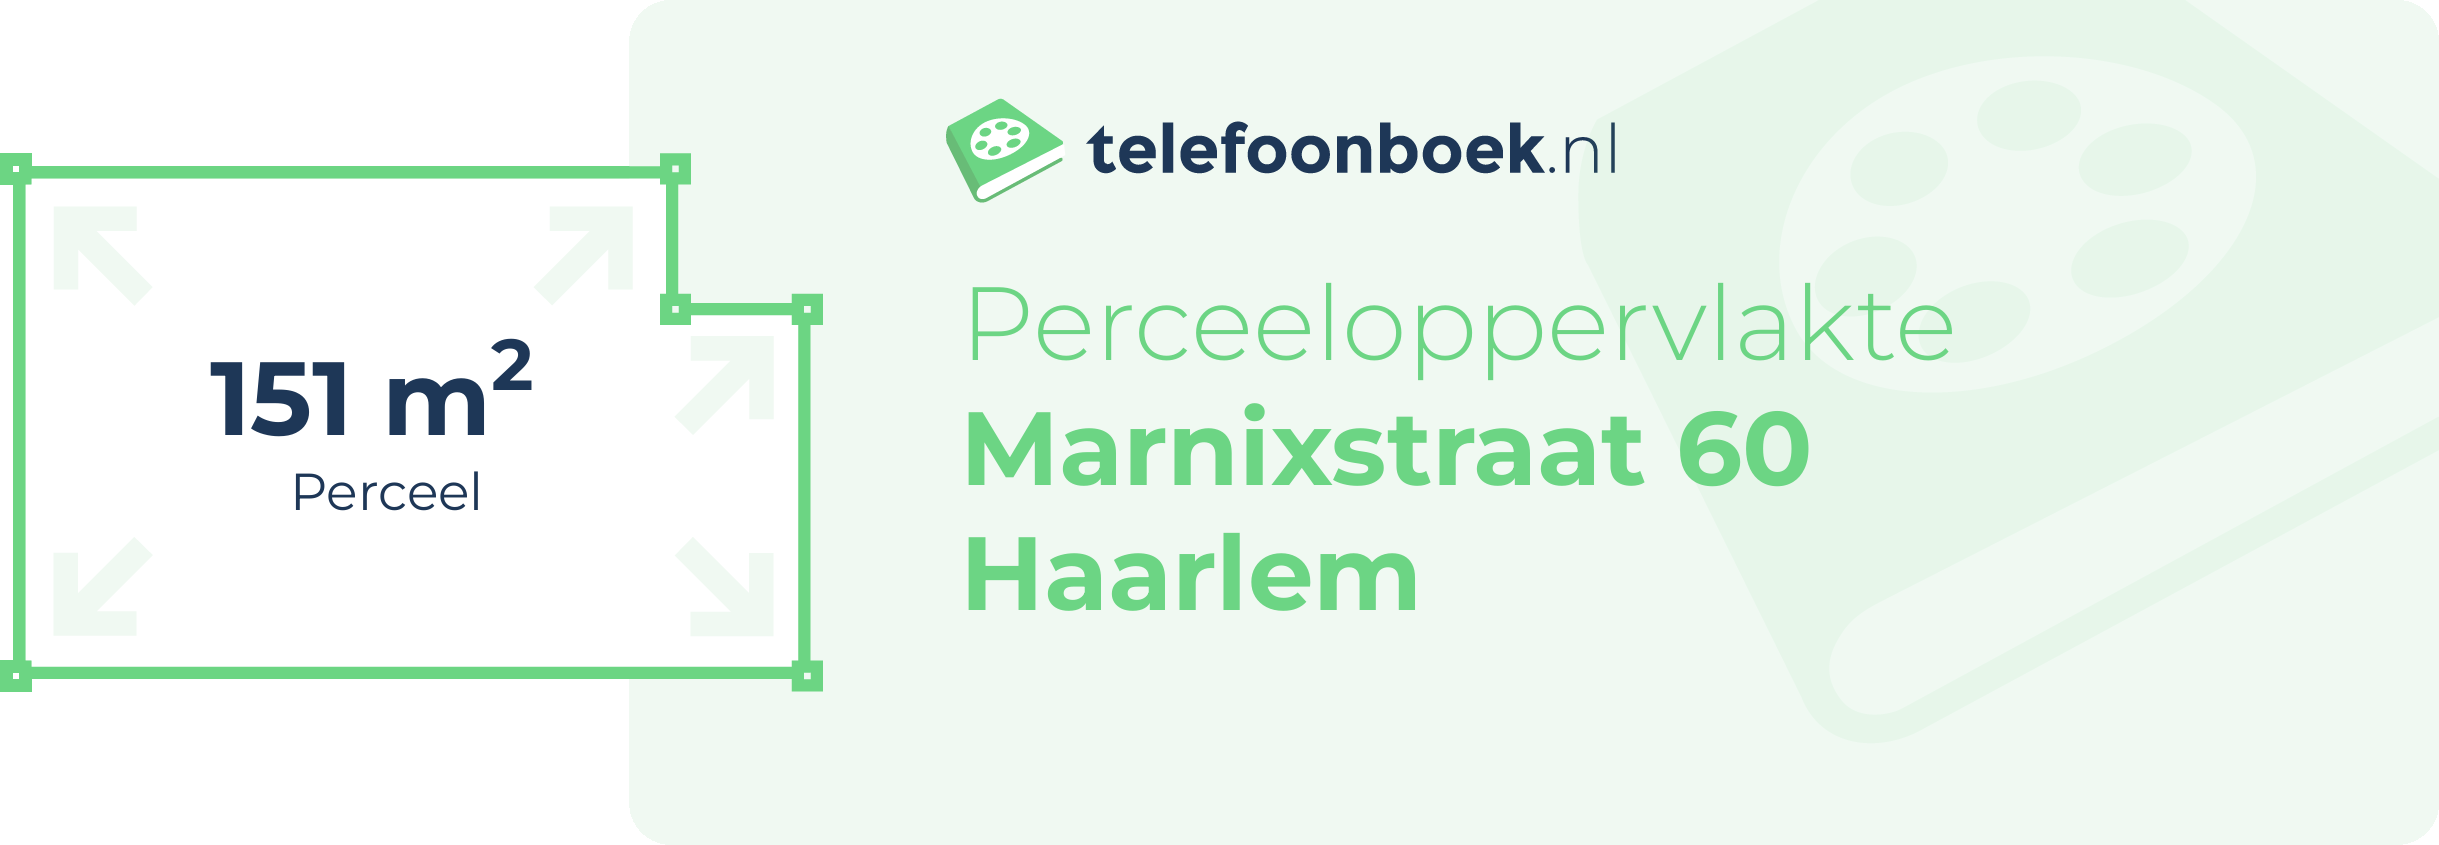 Perceeloppervlakte Marnixstraat 60 Haarlem